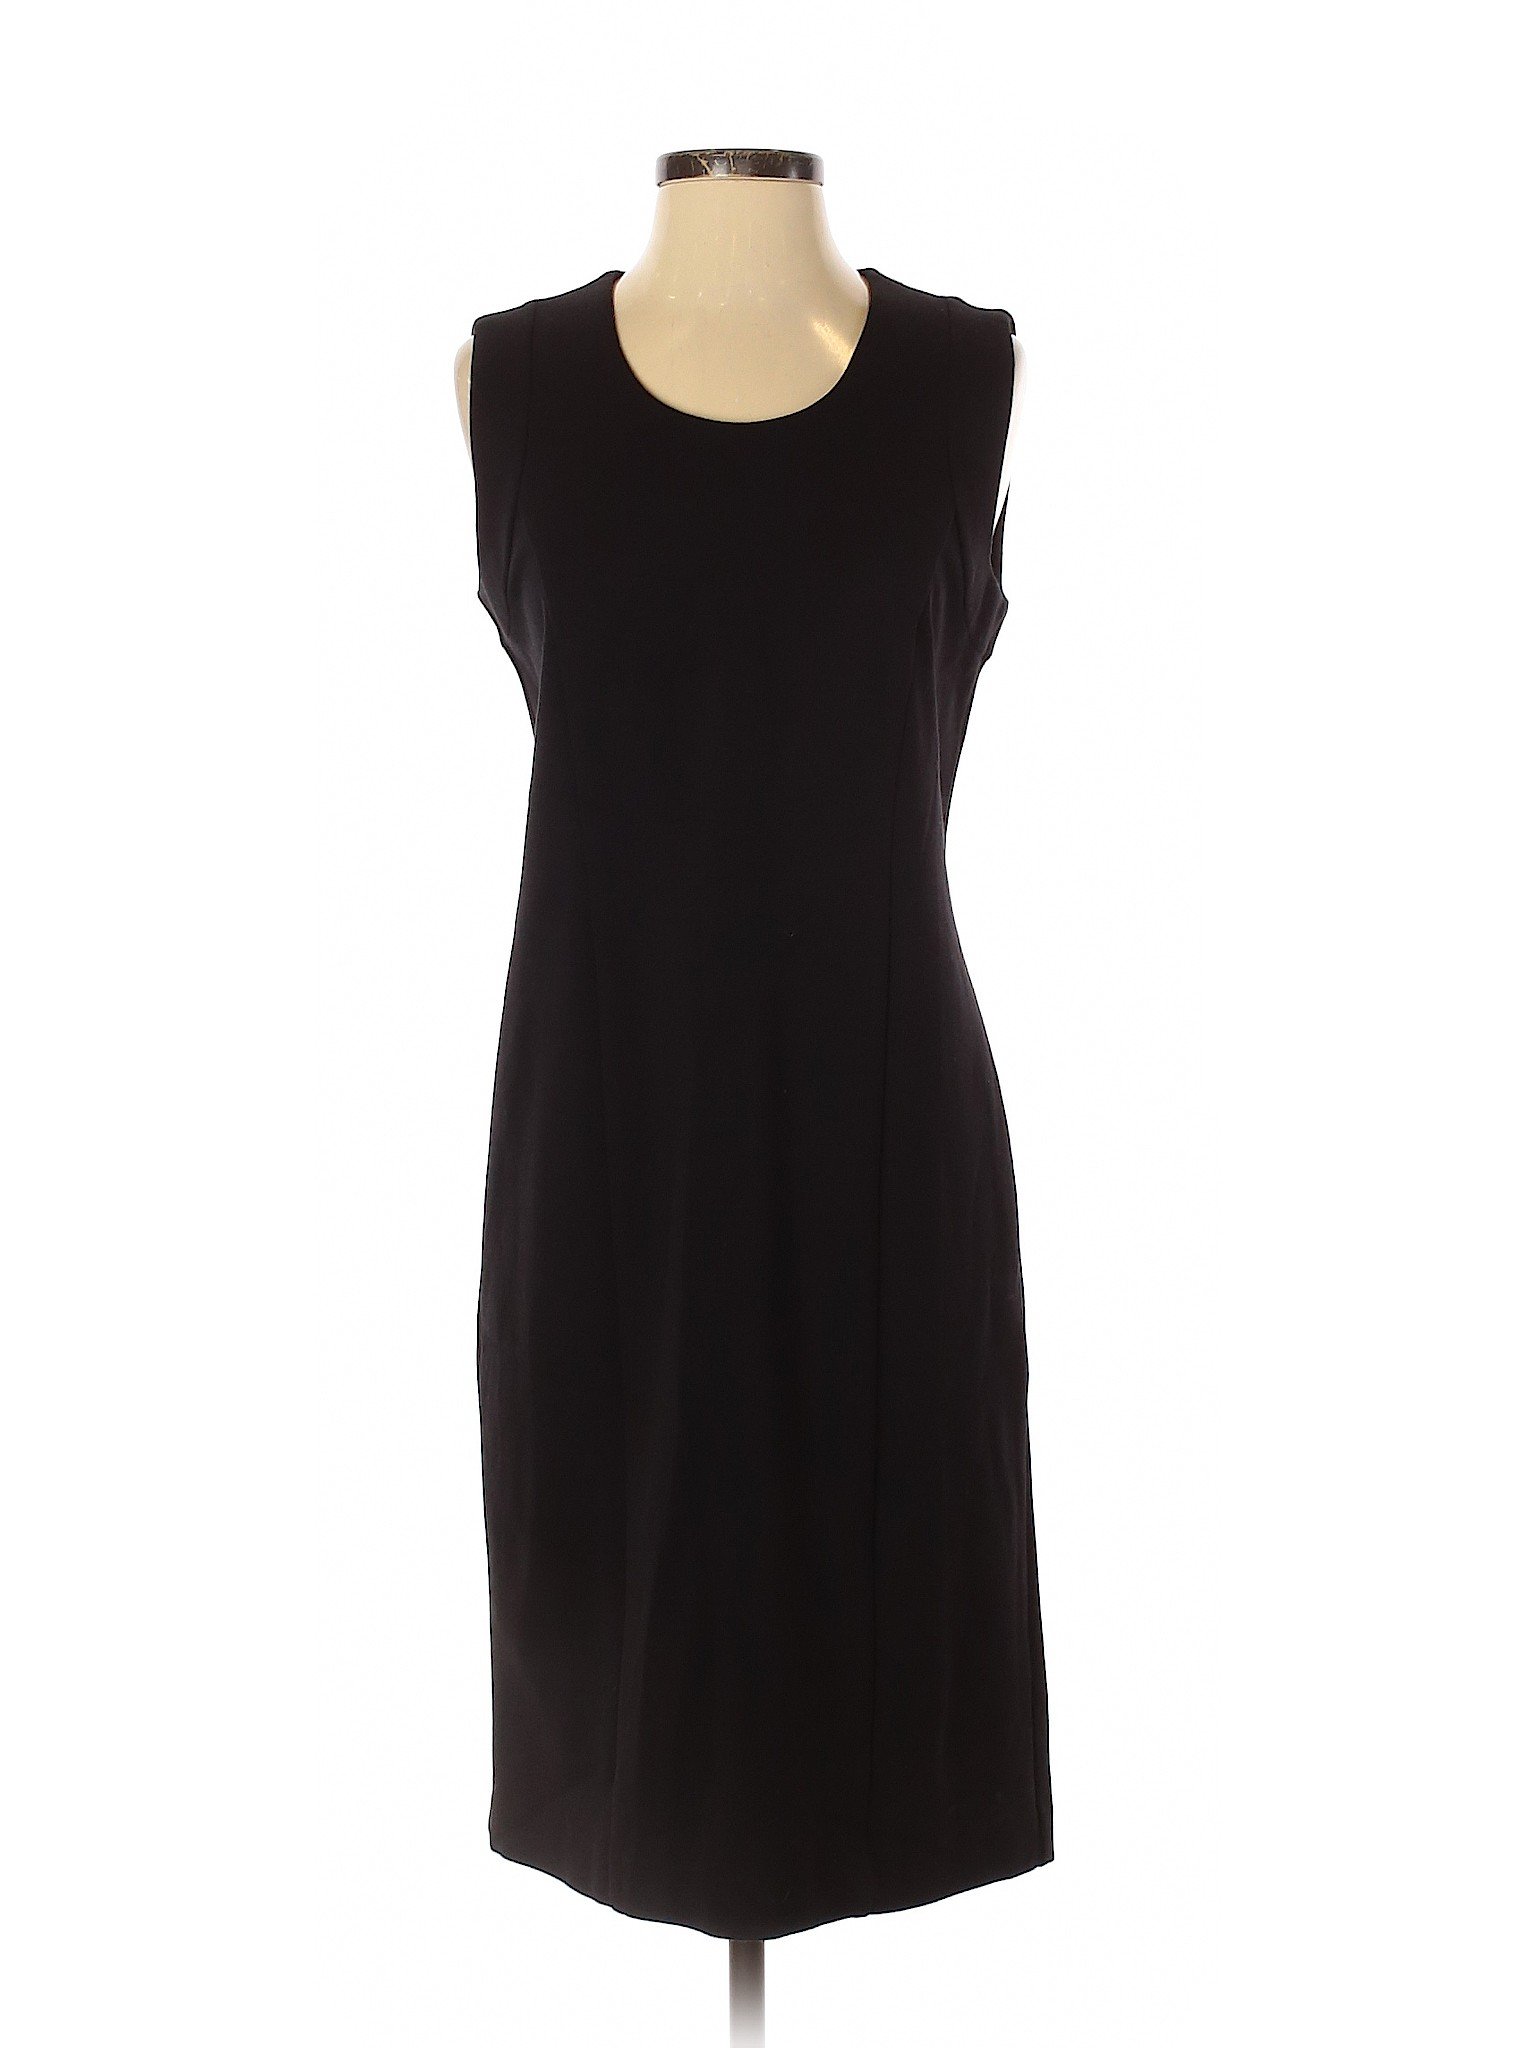 Coldwater Creek Women Black Casual Dress 4 | eBay